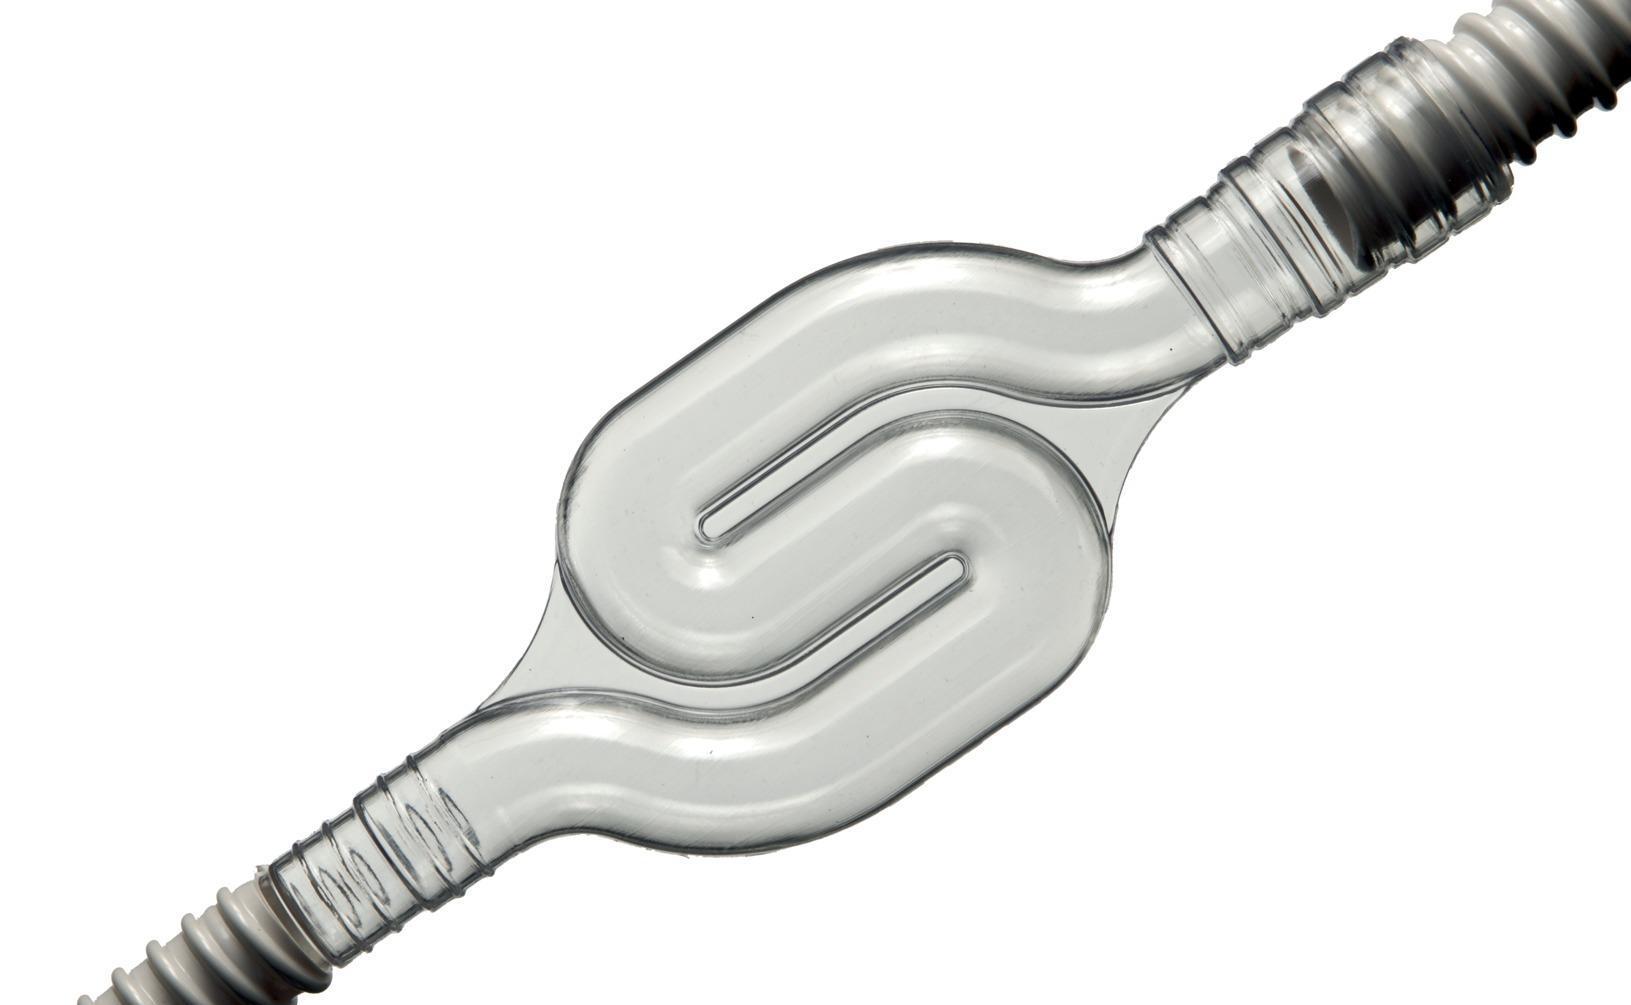 Condensate hose siphon 0024 SF (10 pieces)